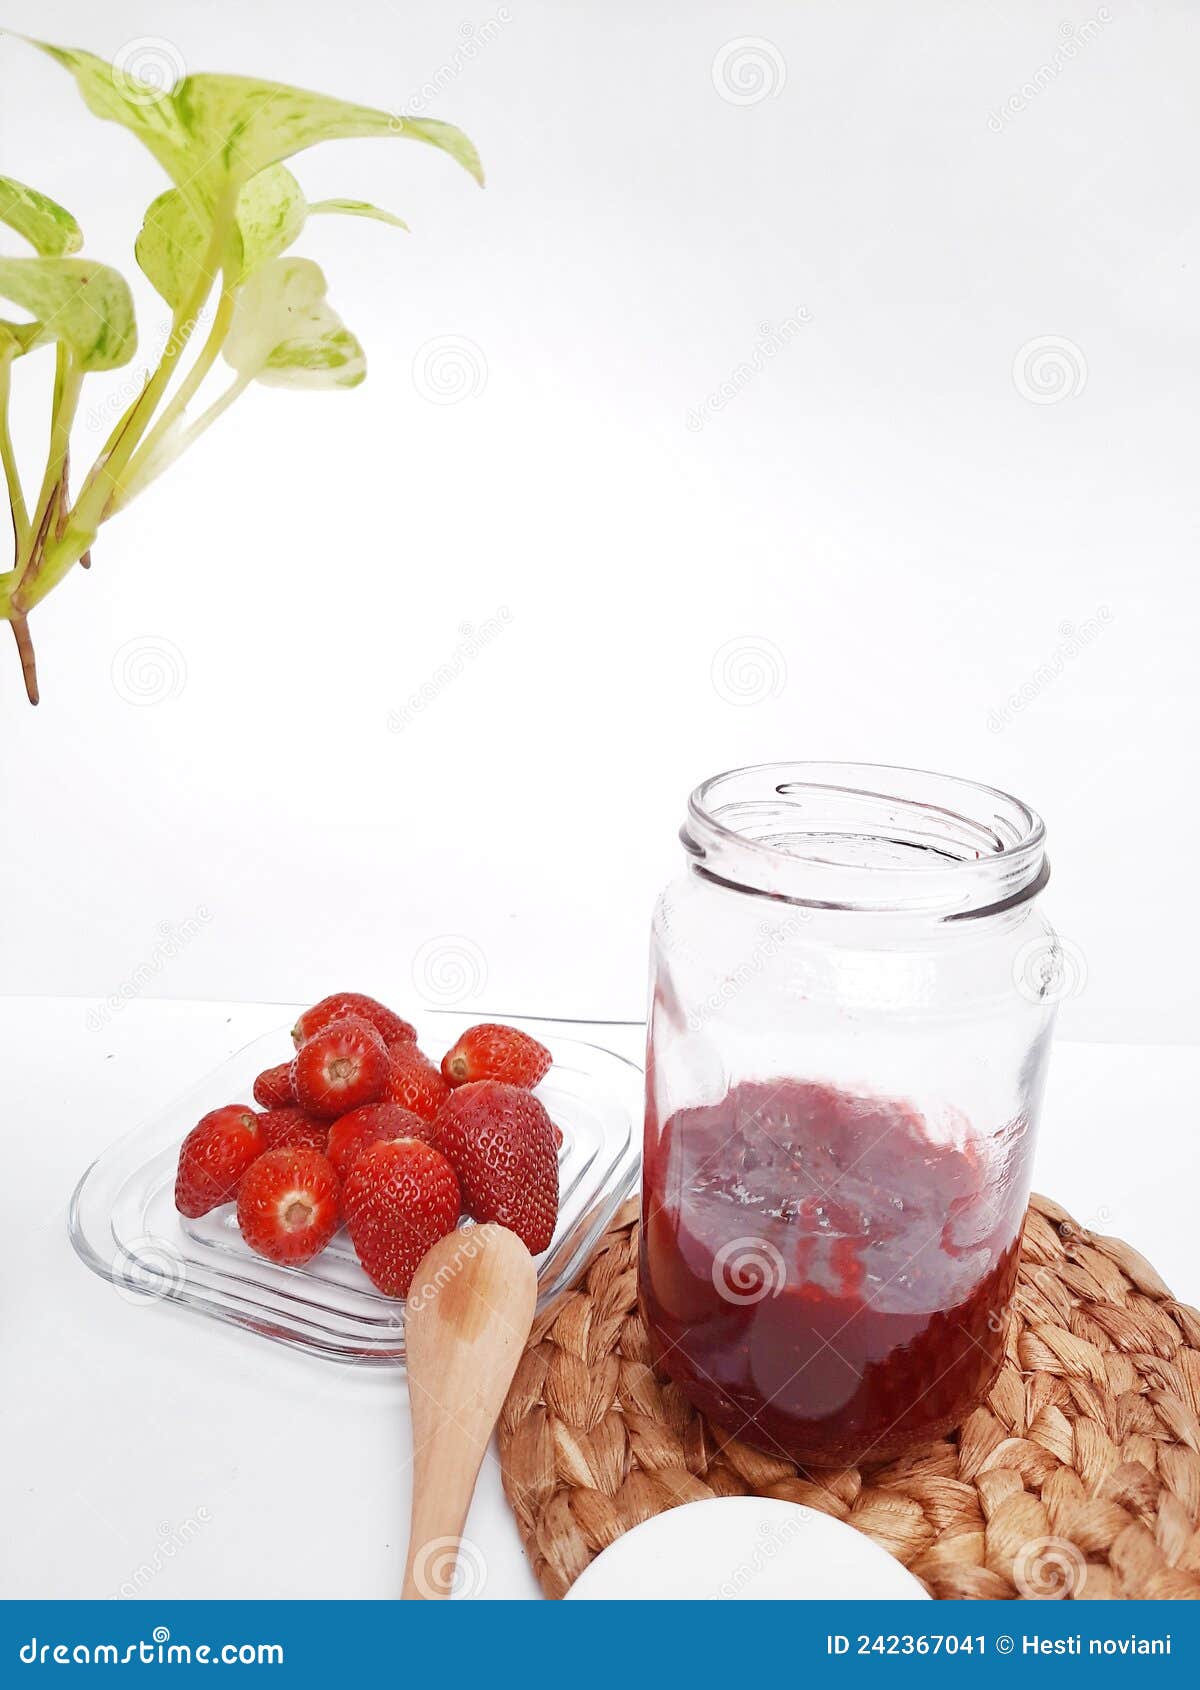 strwaberry jam homemade